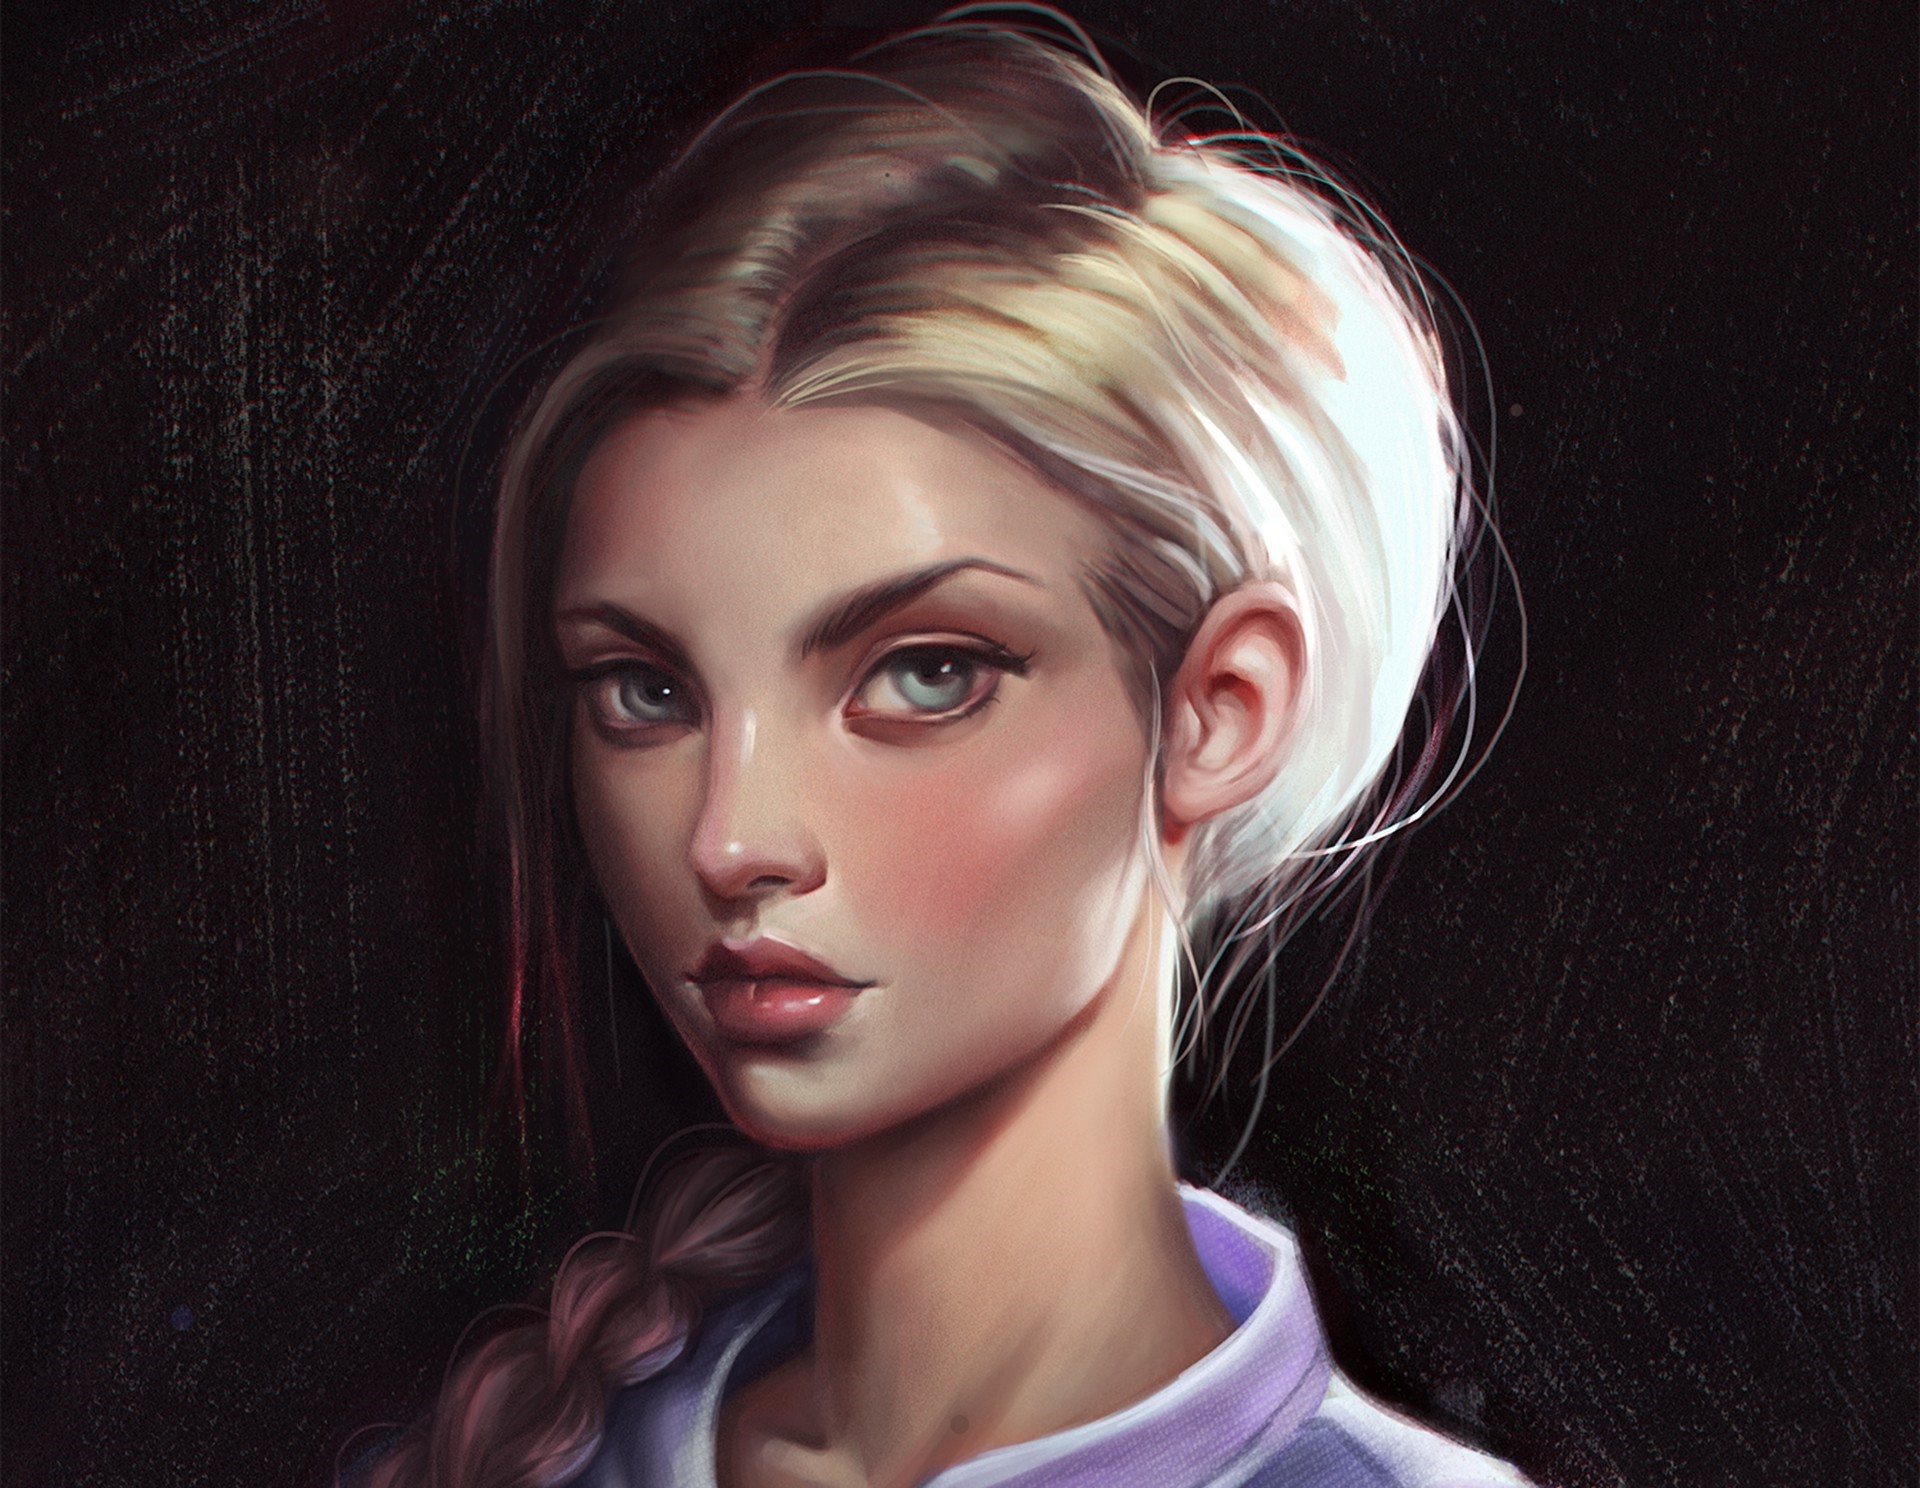 Portrait of a Girl by Chris Kim